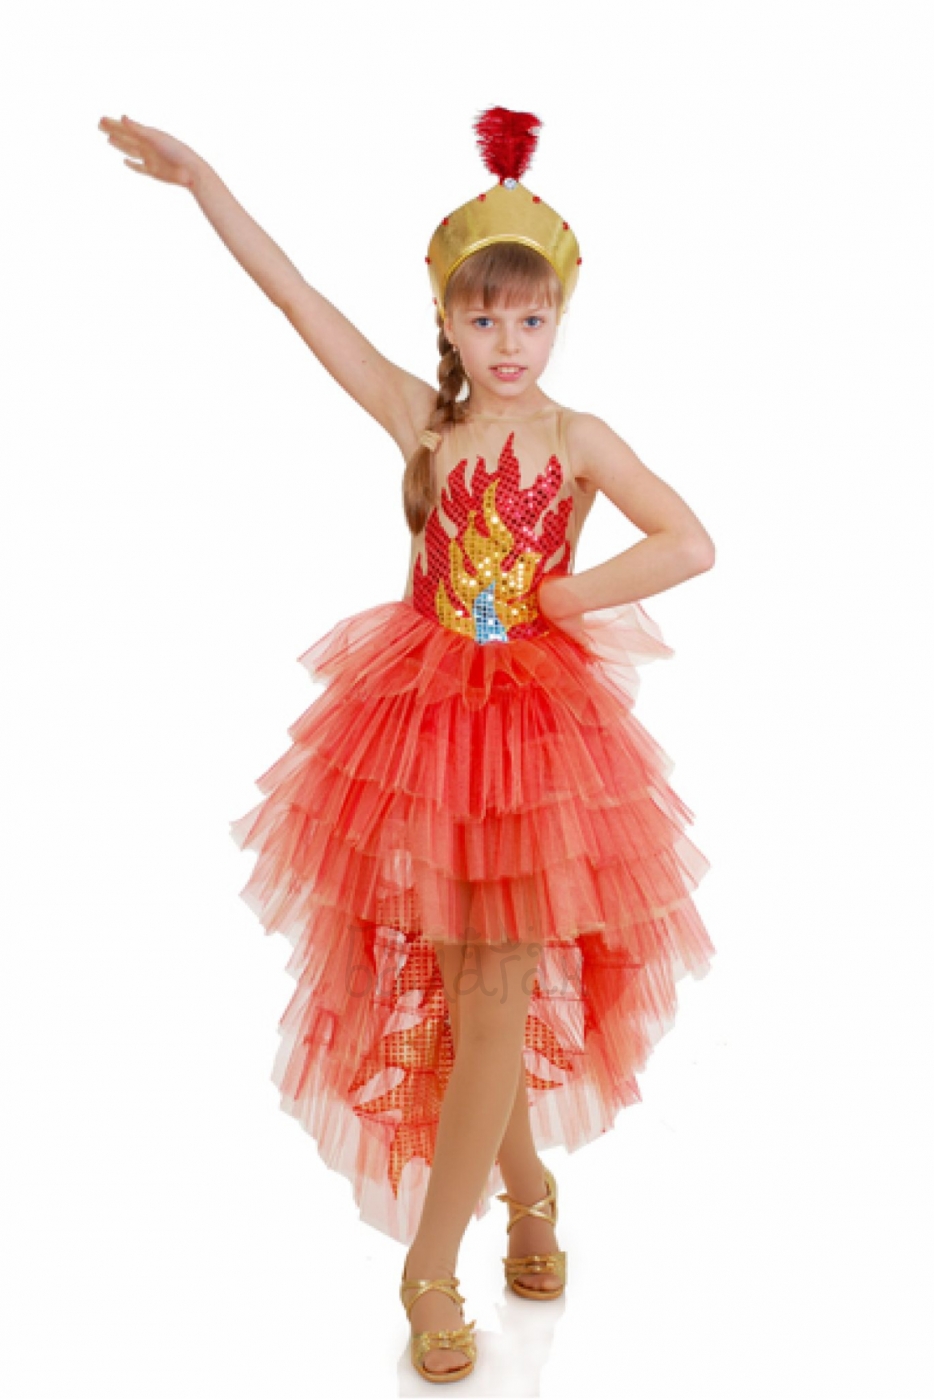 Firebird Ballroom dancing costume for little girl